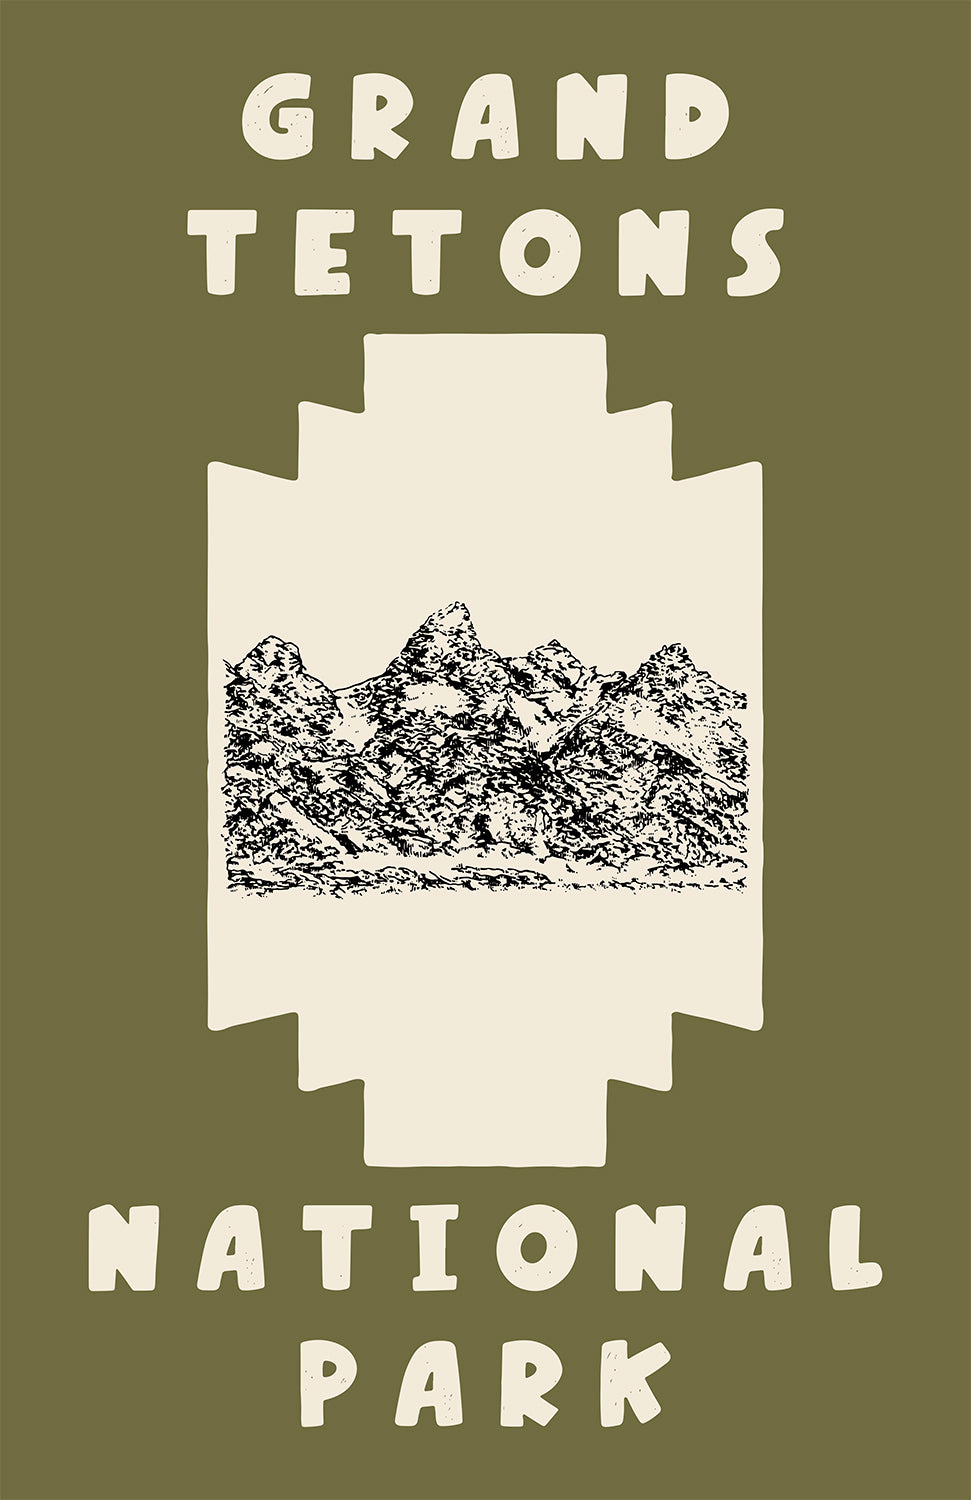 GRAND TETONS NATIONAL PARK